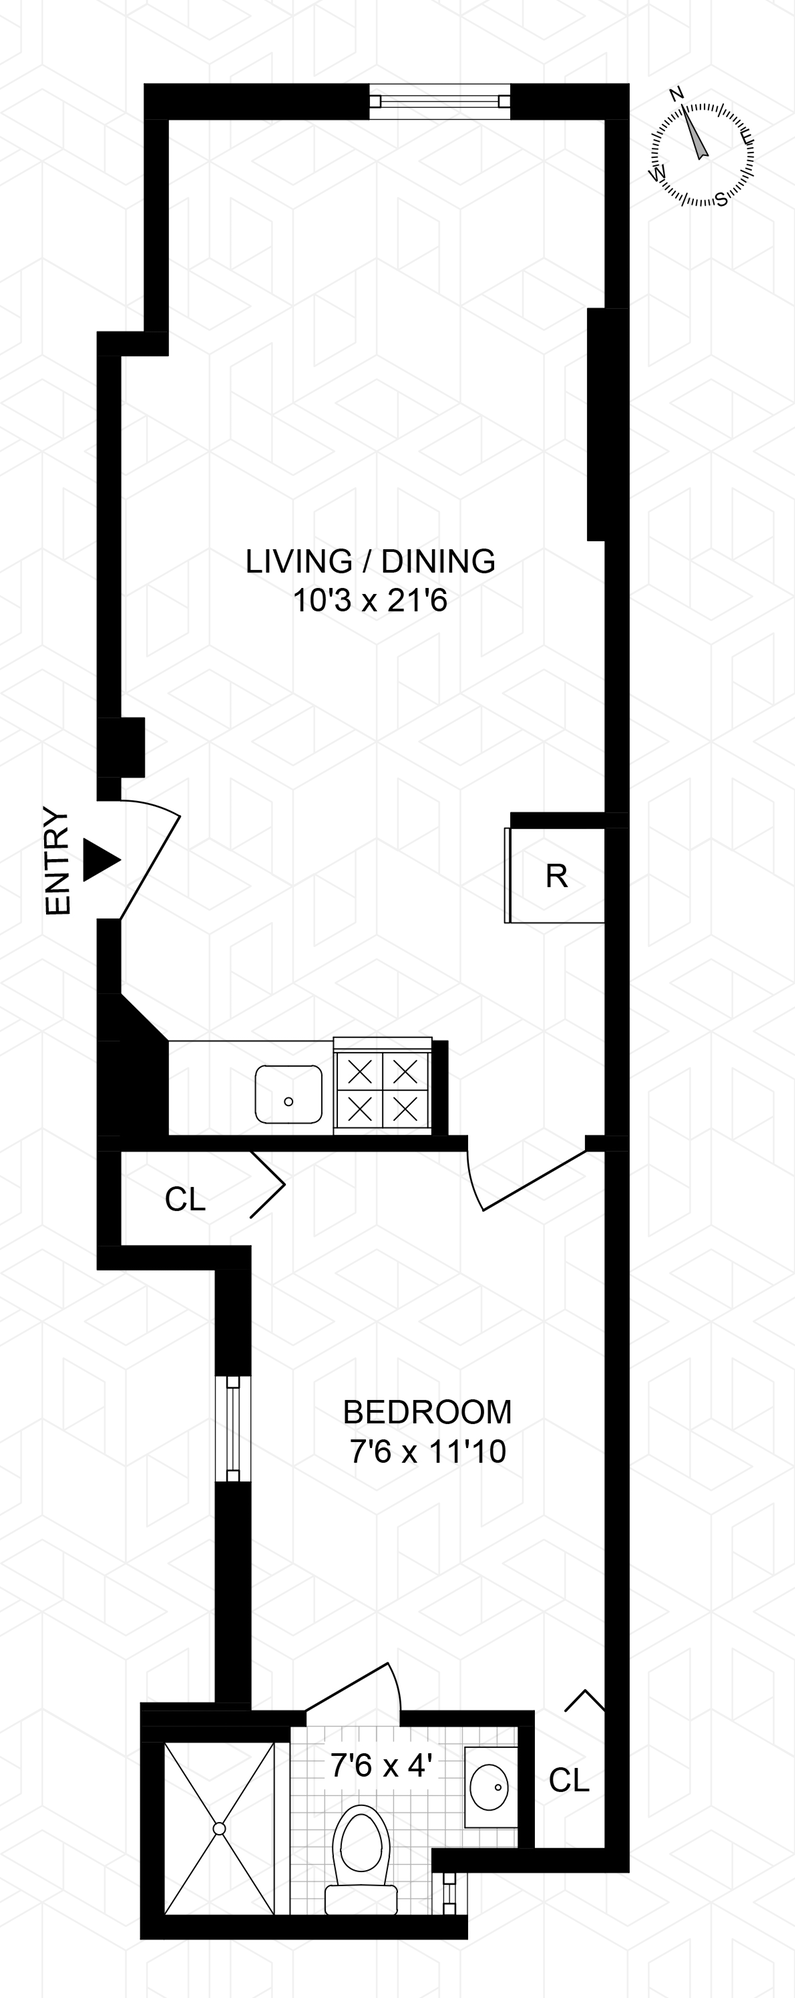 Floorplan for 210 East 88th Street, 1B